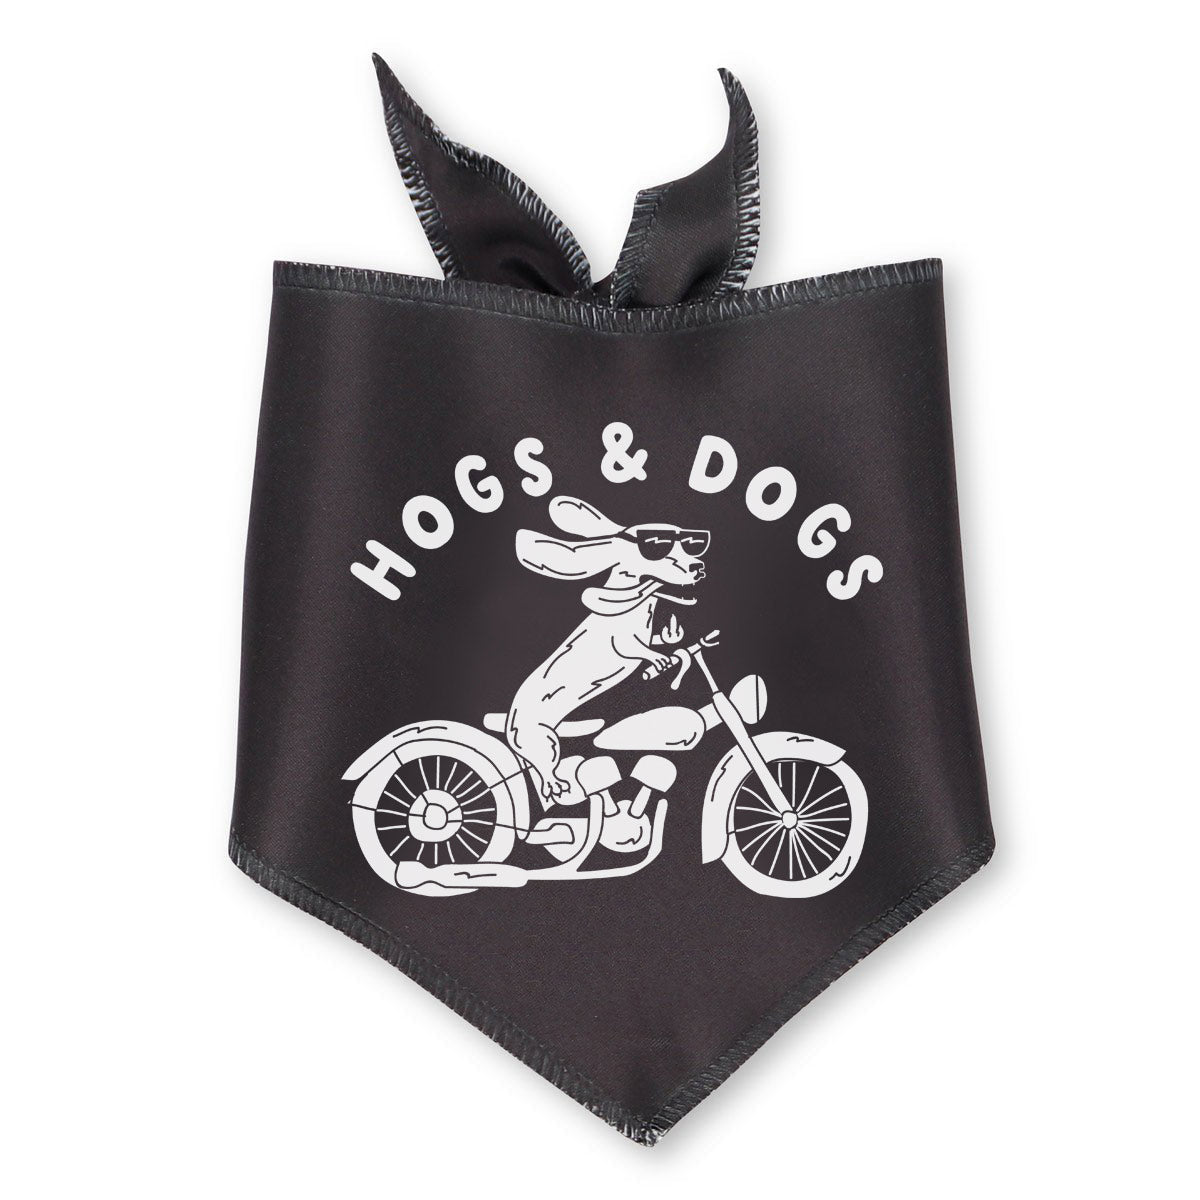 hogs & dogs dog bandana - bean goods